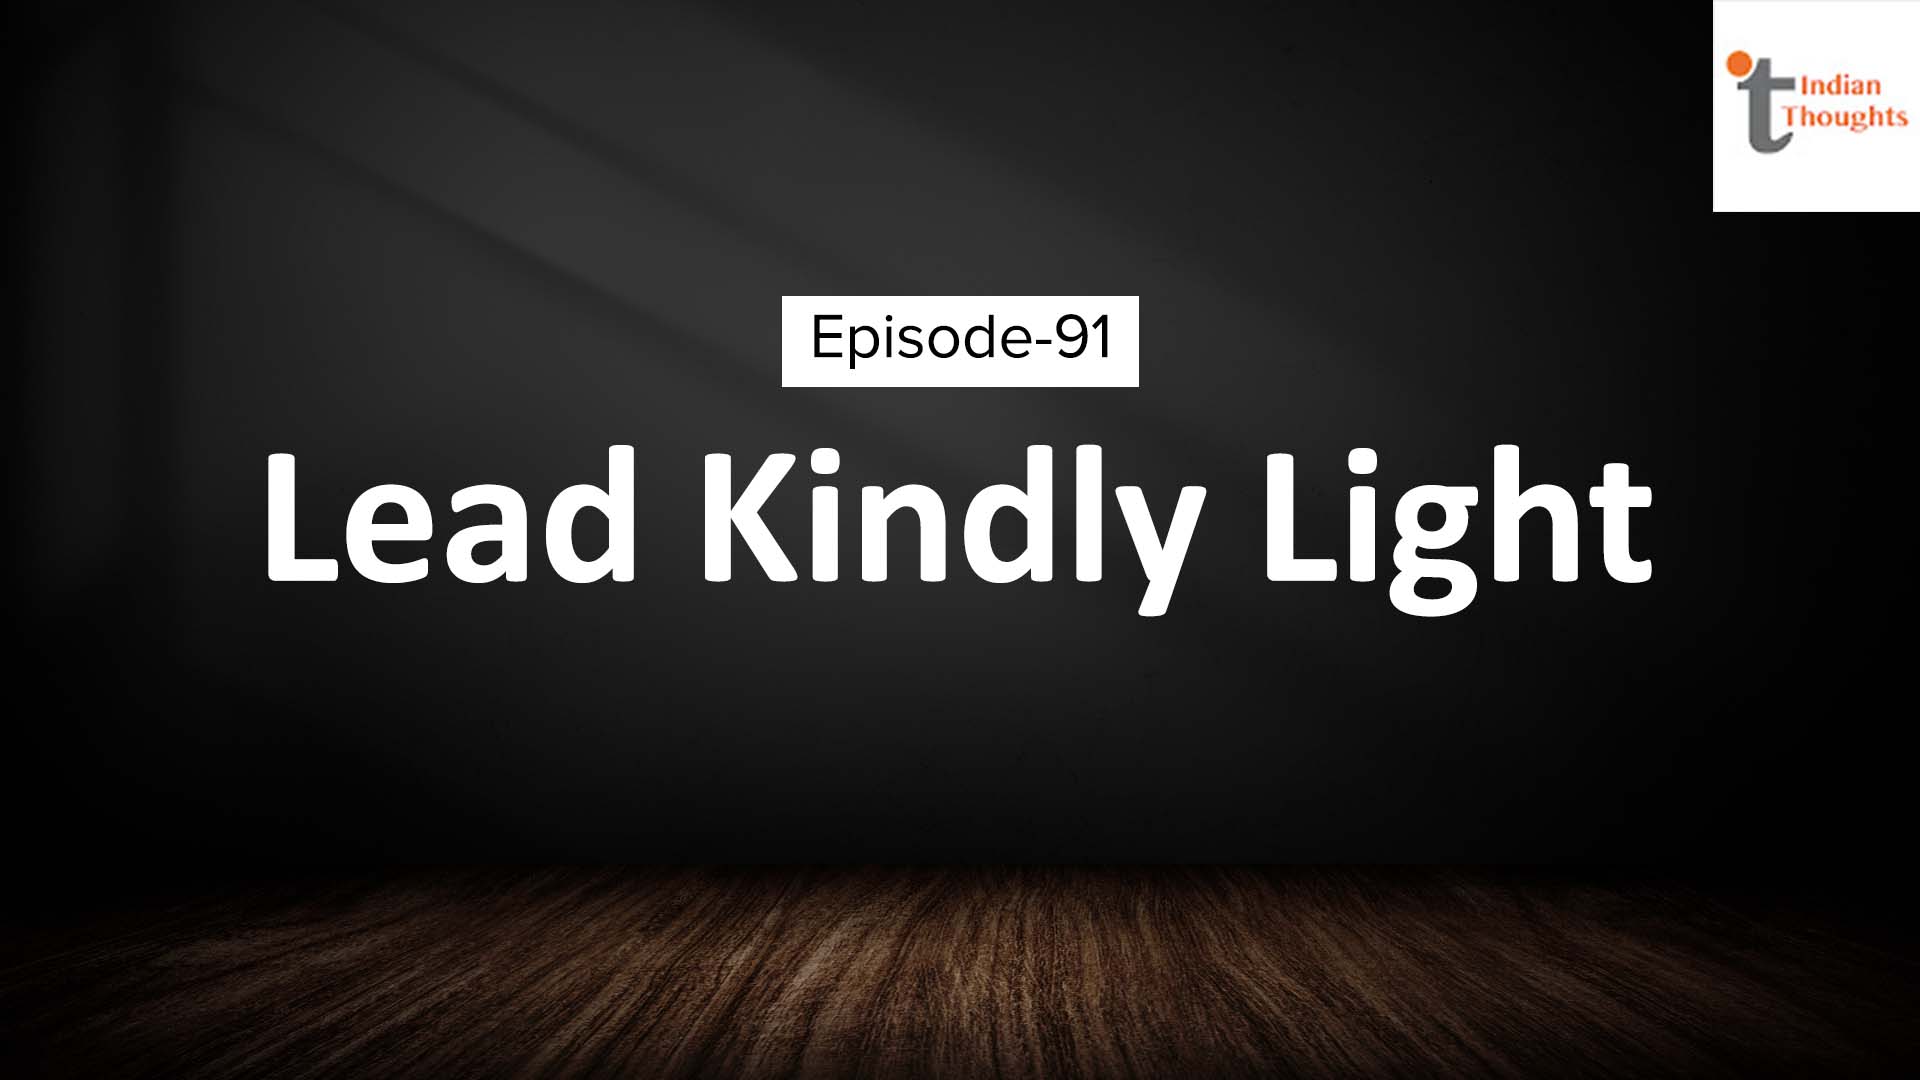 Lead kindly Light